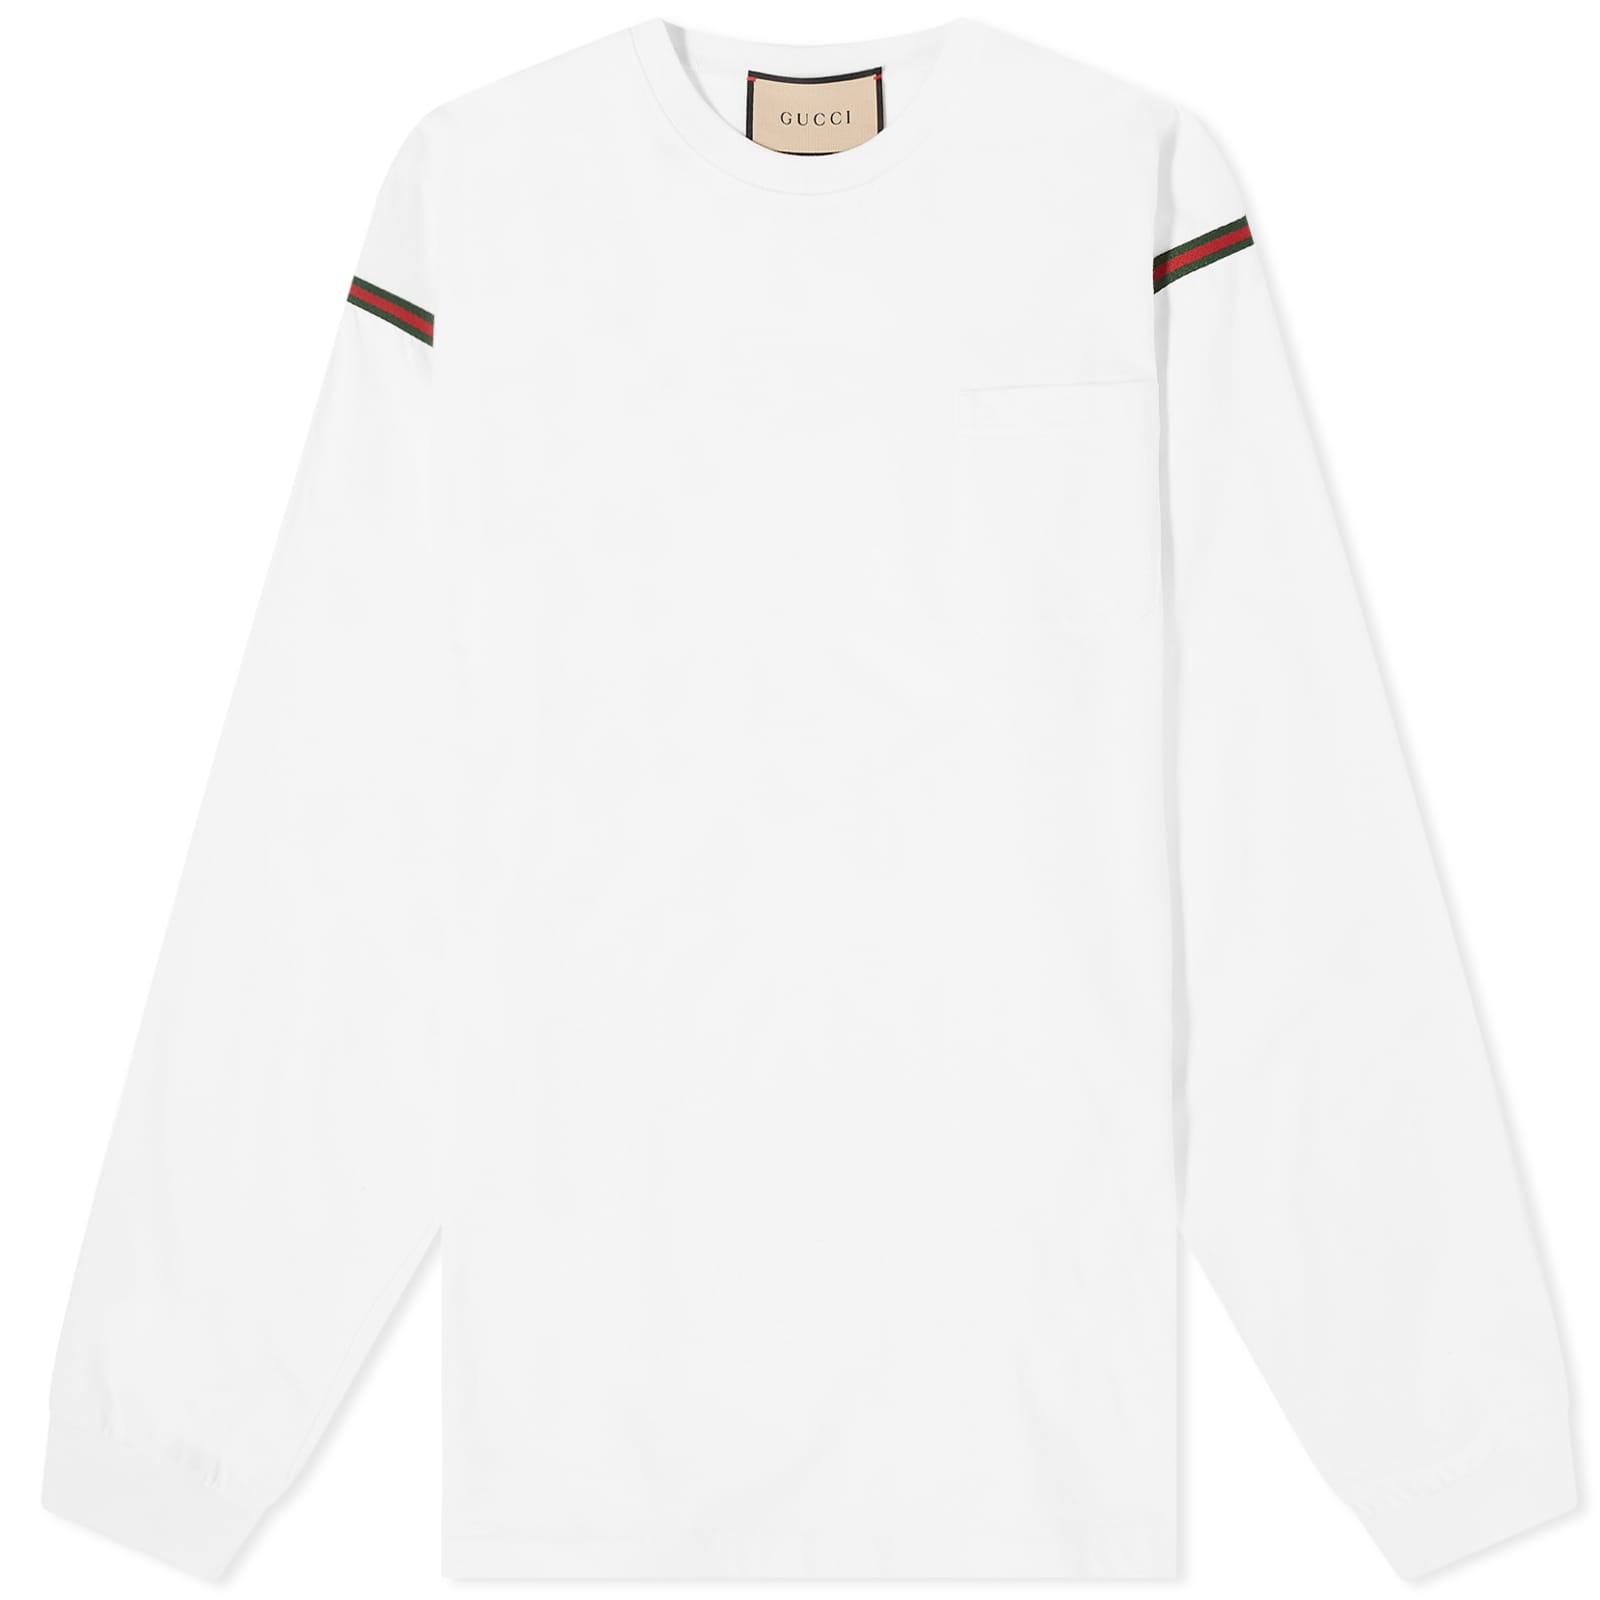 Футболка Gucci Tape Long Sleeve, белый футболка с длинным рукавом tape henrik vibskov черный